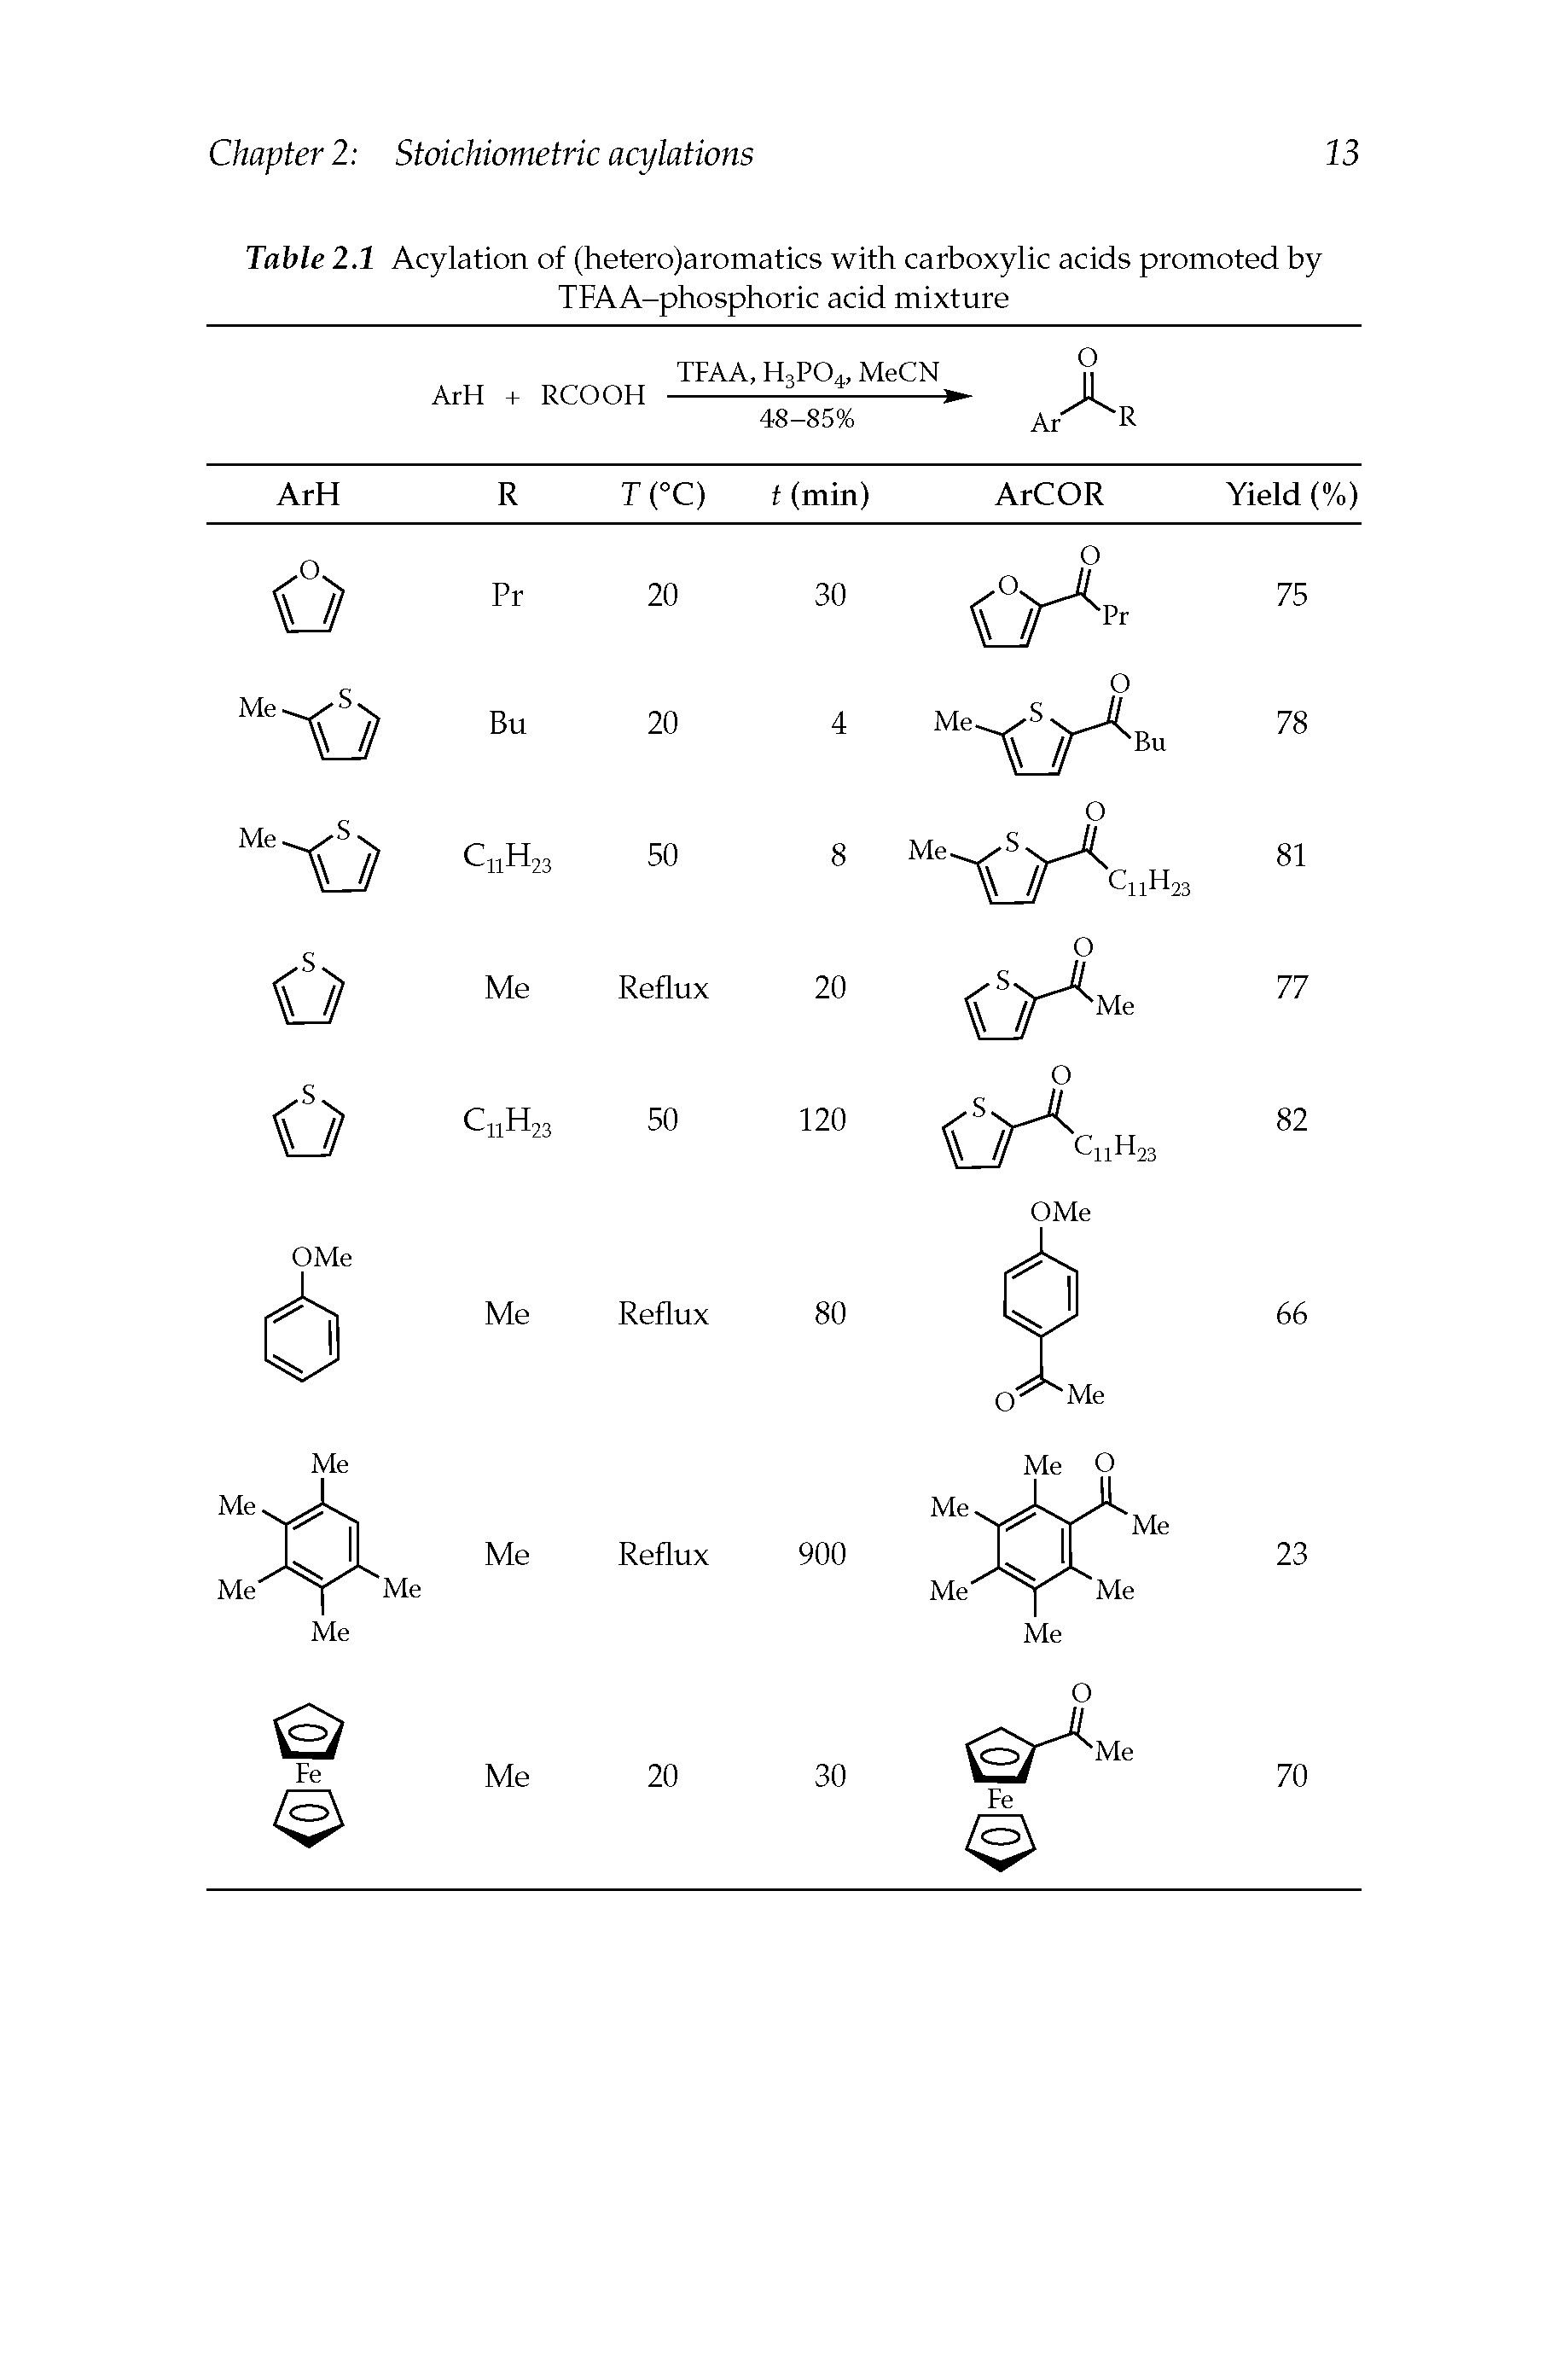 Table 2.1 Acylation of (hetero)aromatics with carboxylic acids promoted by TFAA-phosphoric acid mixture...